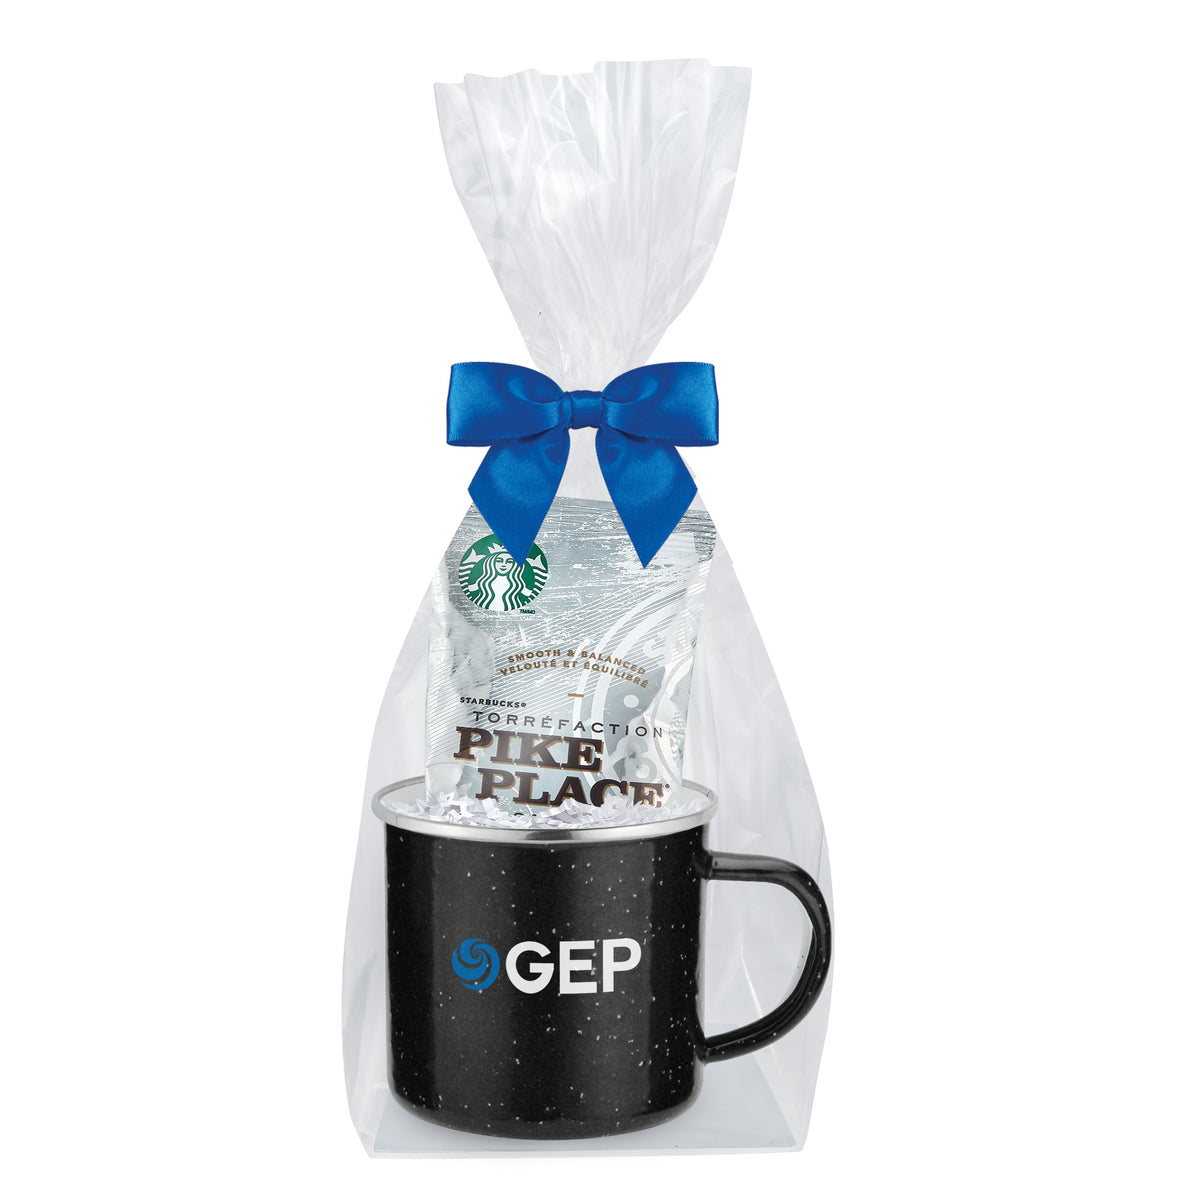 Speckled Camping Mug - 16 oz., Starbucks® Pike Place Ground Coffee